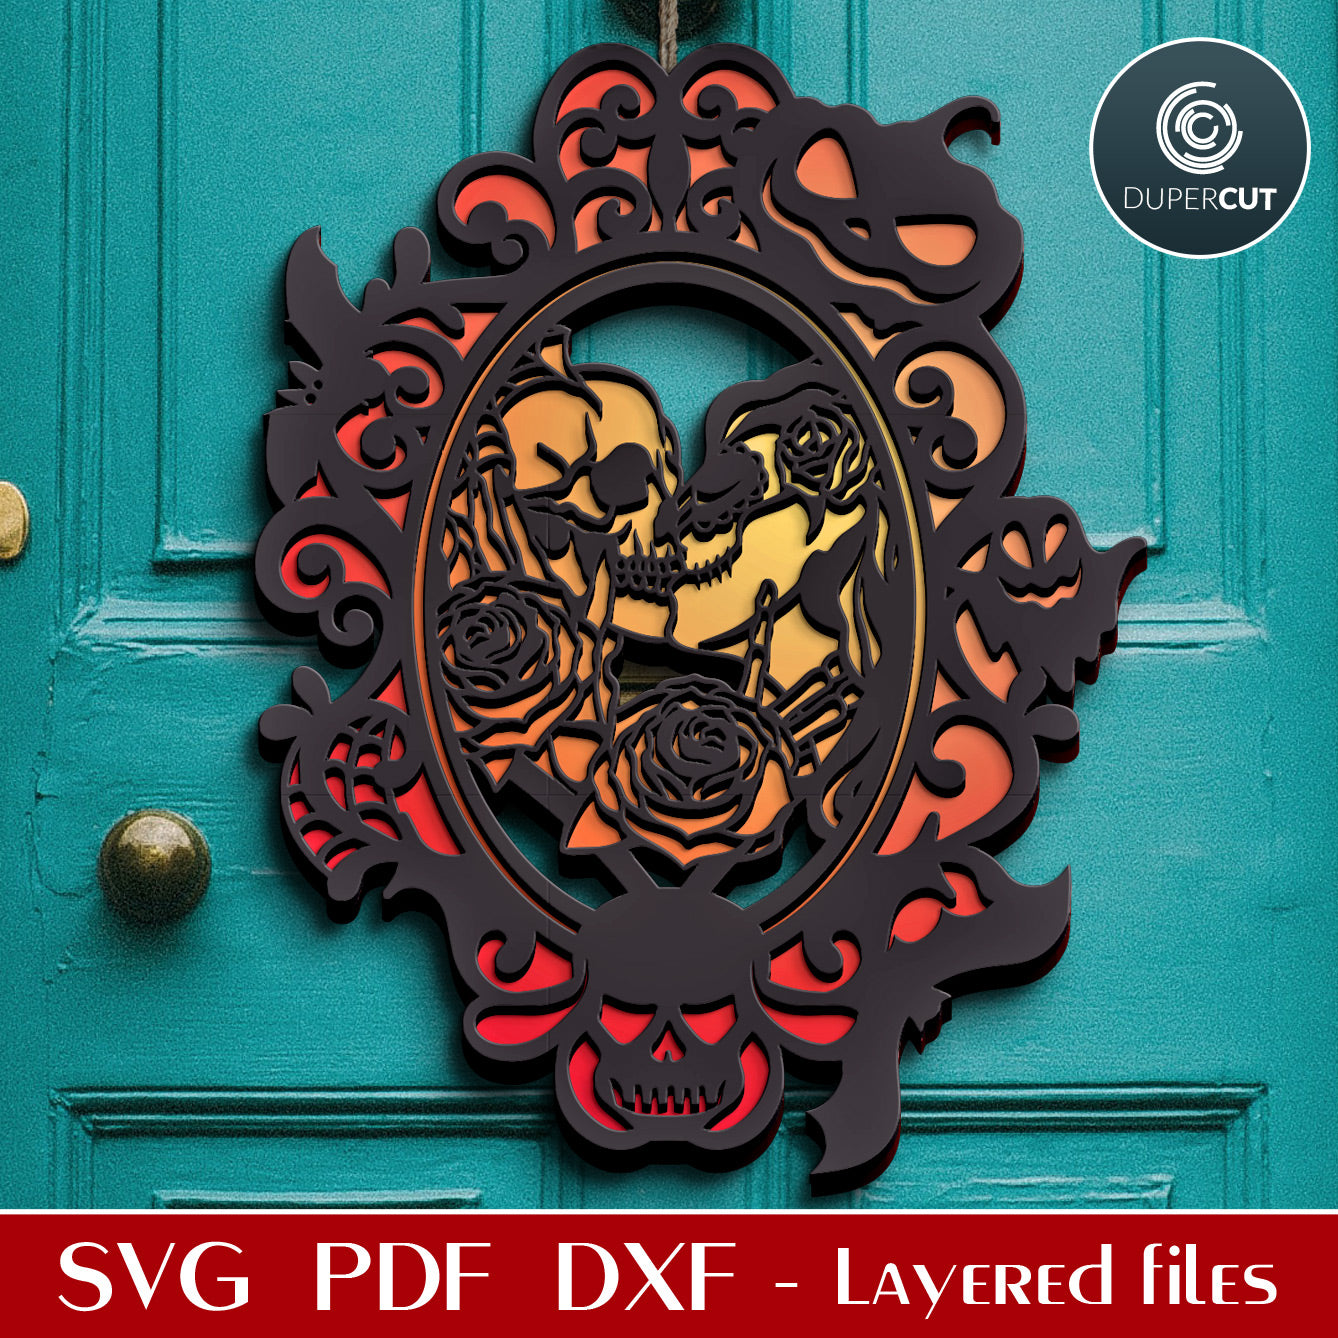 Skull kiss Halloween door hanger decoration - SVG DXF layered cut files for Glowforge, X-tool, Cricut, CNC plasma machines, scroll saw pattern by www.DuperCut.com